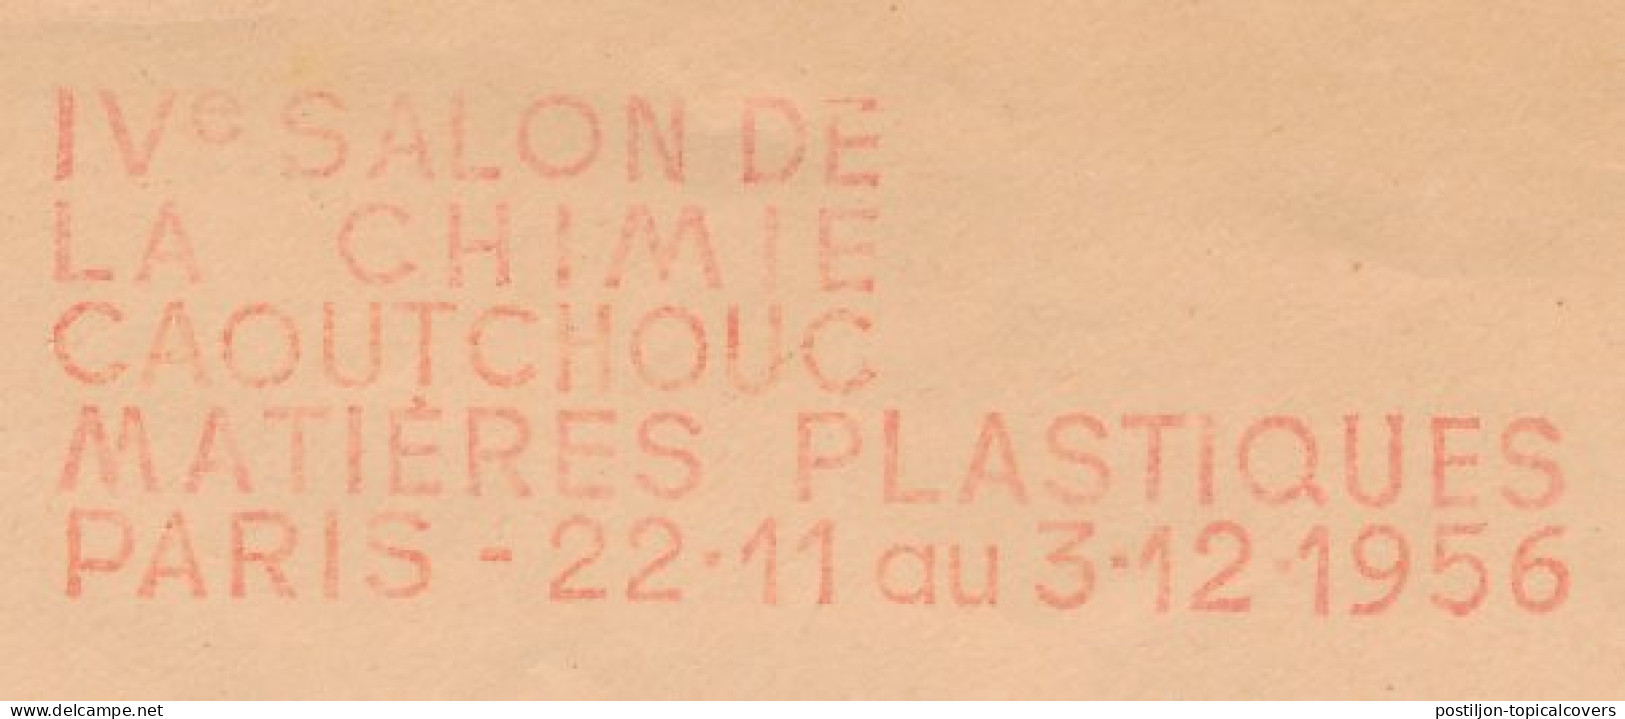 Meter Cover France 1956 Chemistry Exhibition - Rubber - Plastics - Scheikunde